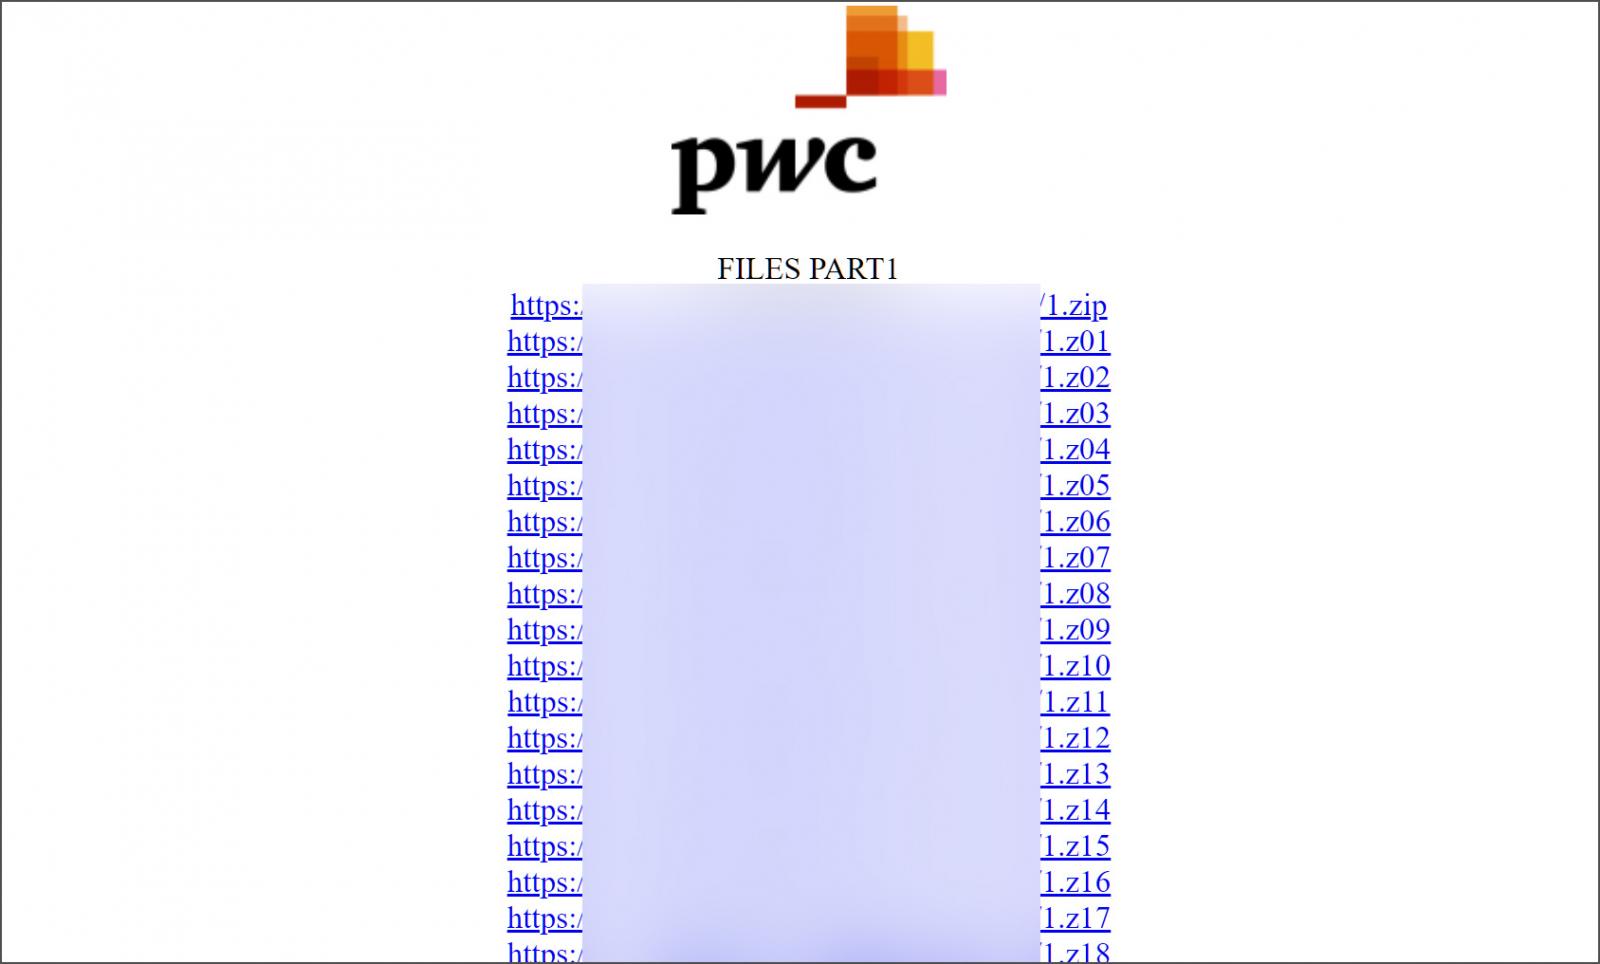 Clearweb site created to leak PWC data